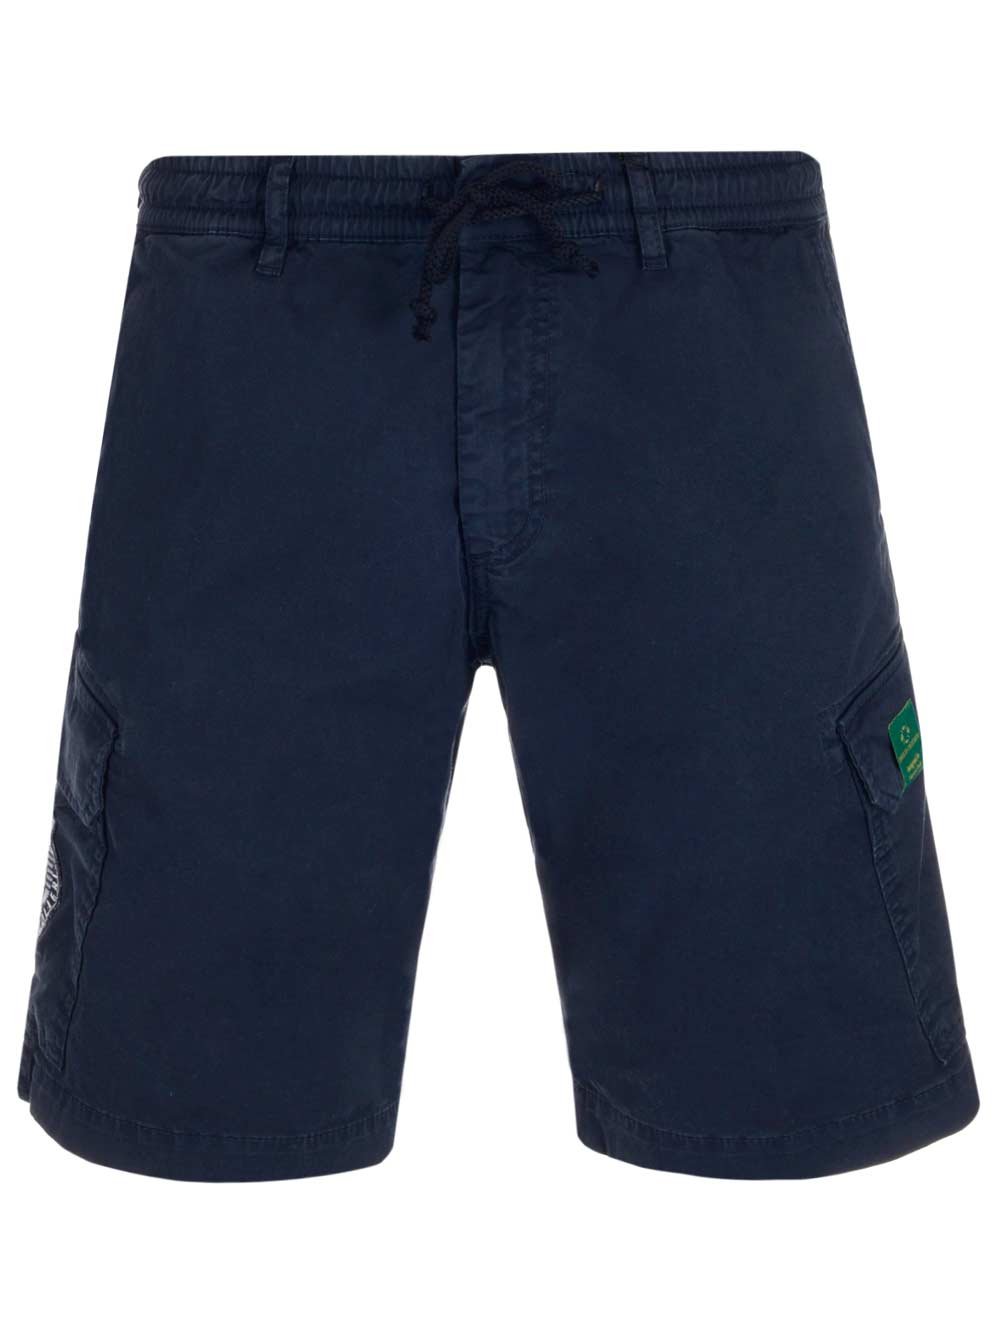 Blue cotton bermuda shorts